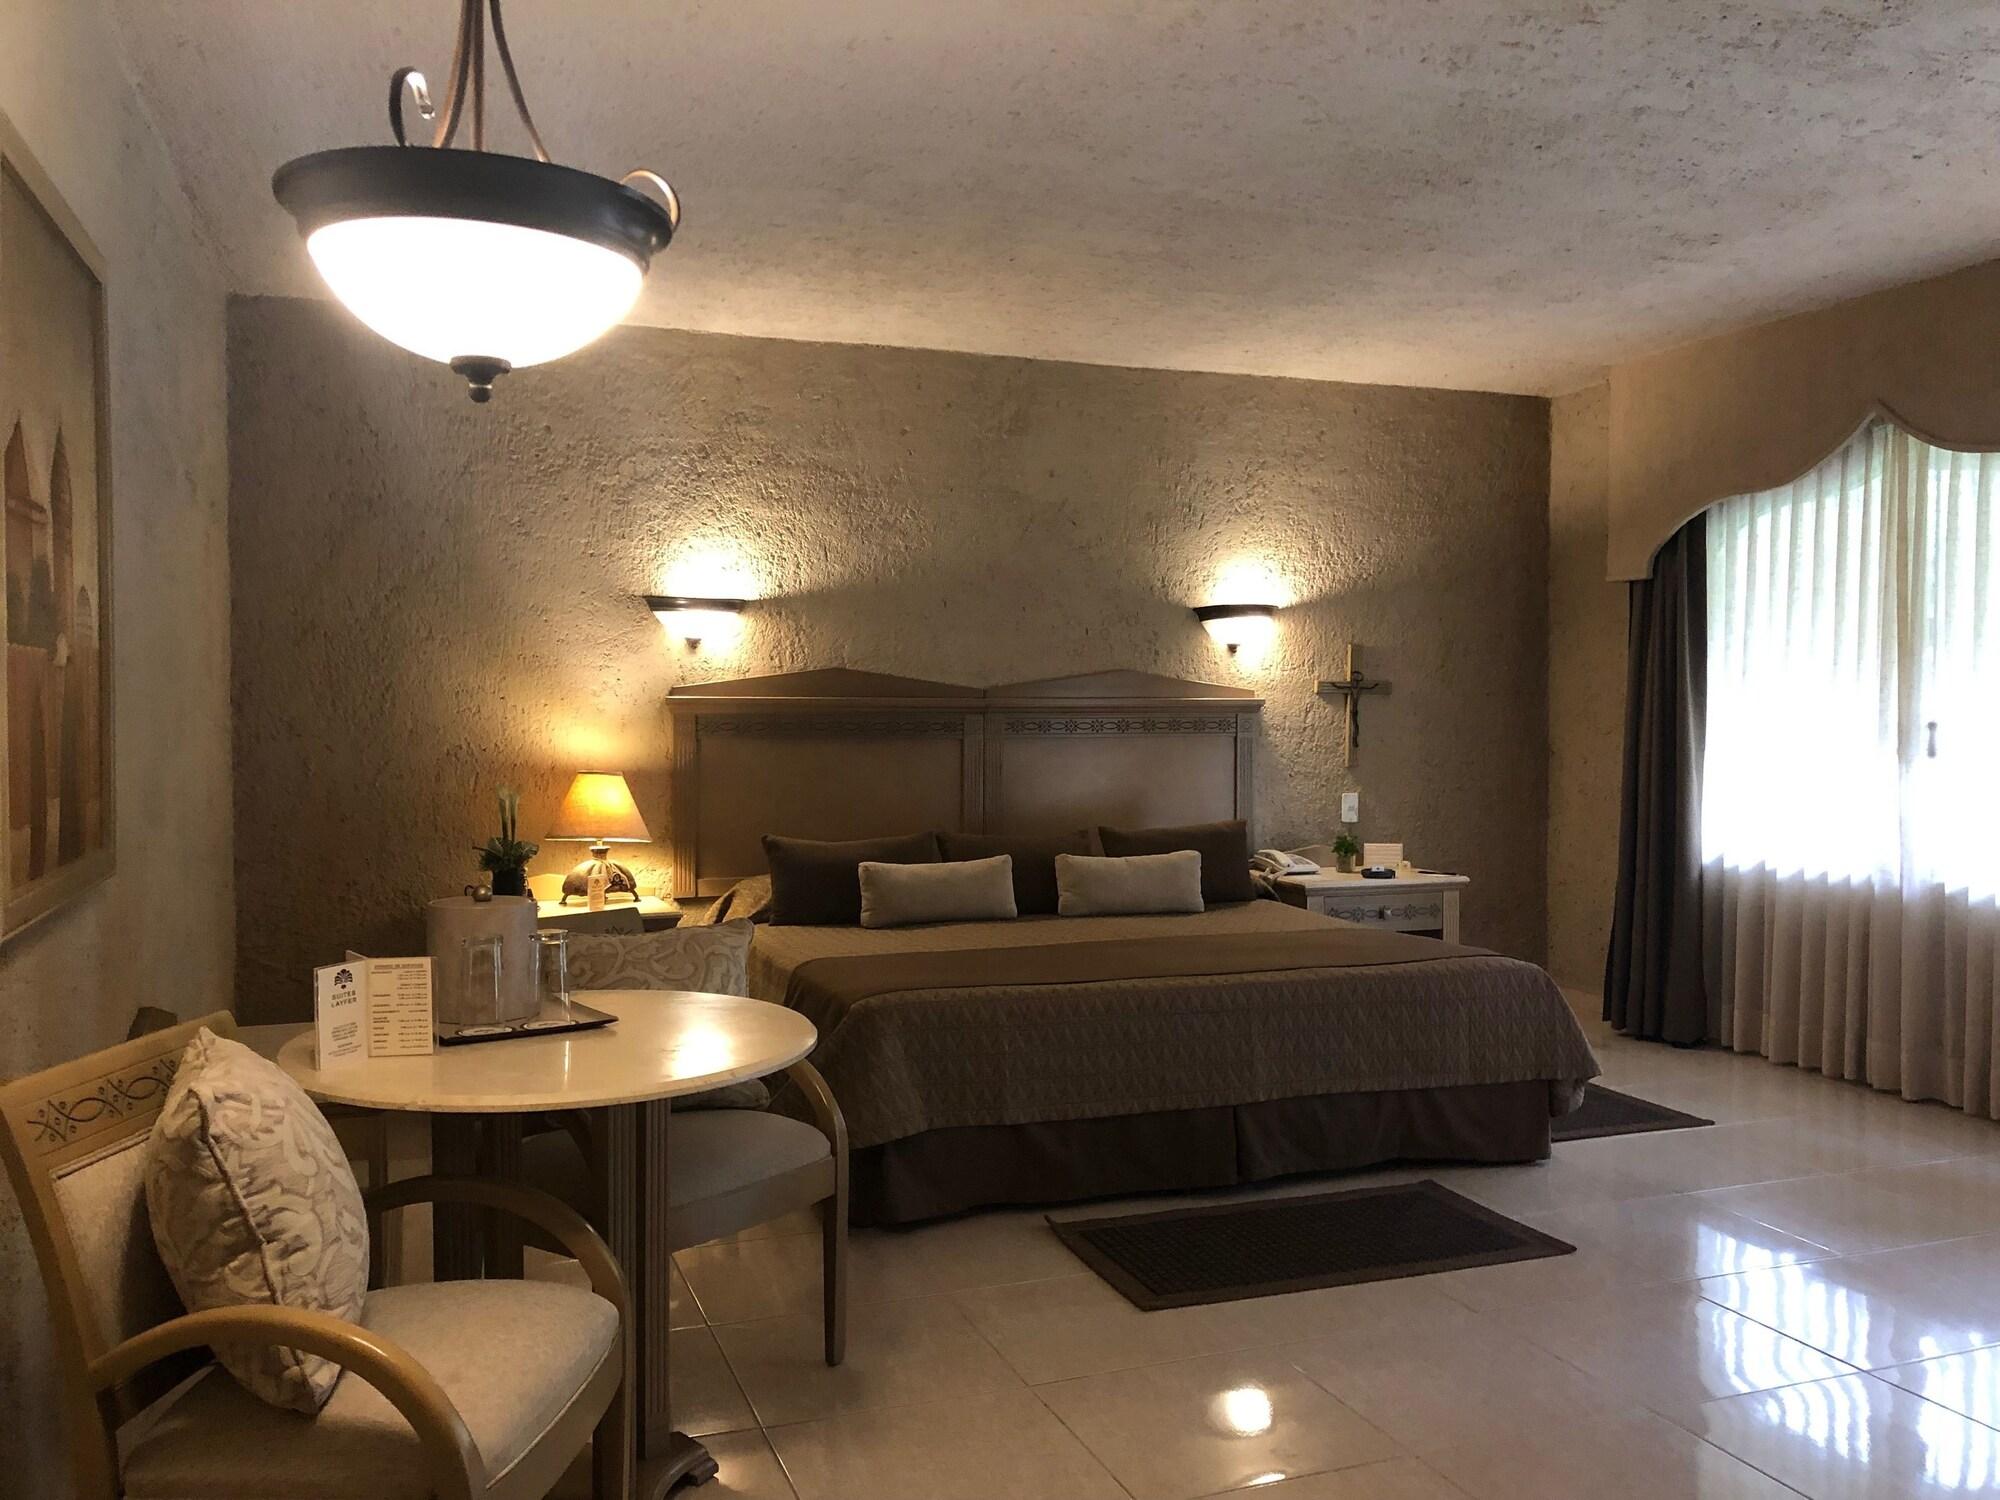 Suites Layfer, Cordoba, Veracruz, Mexico Exterior photo